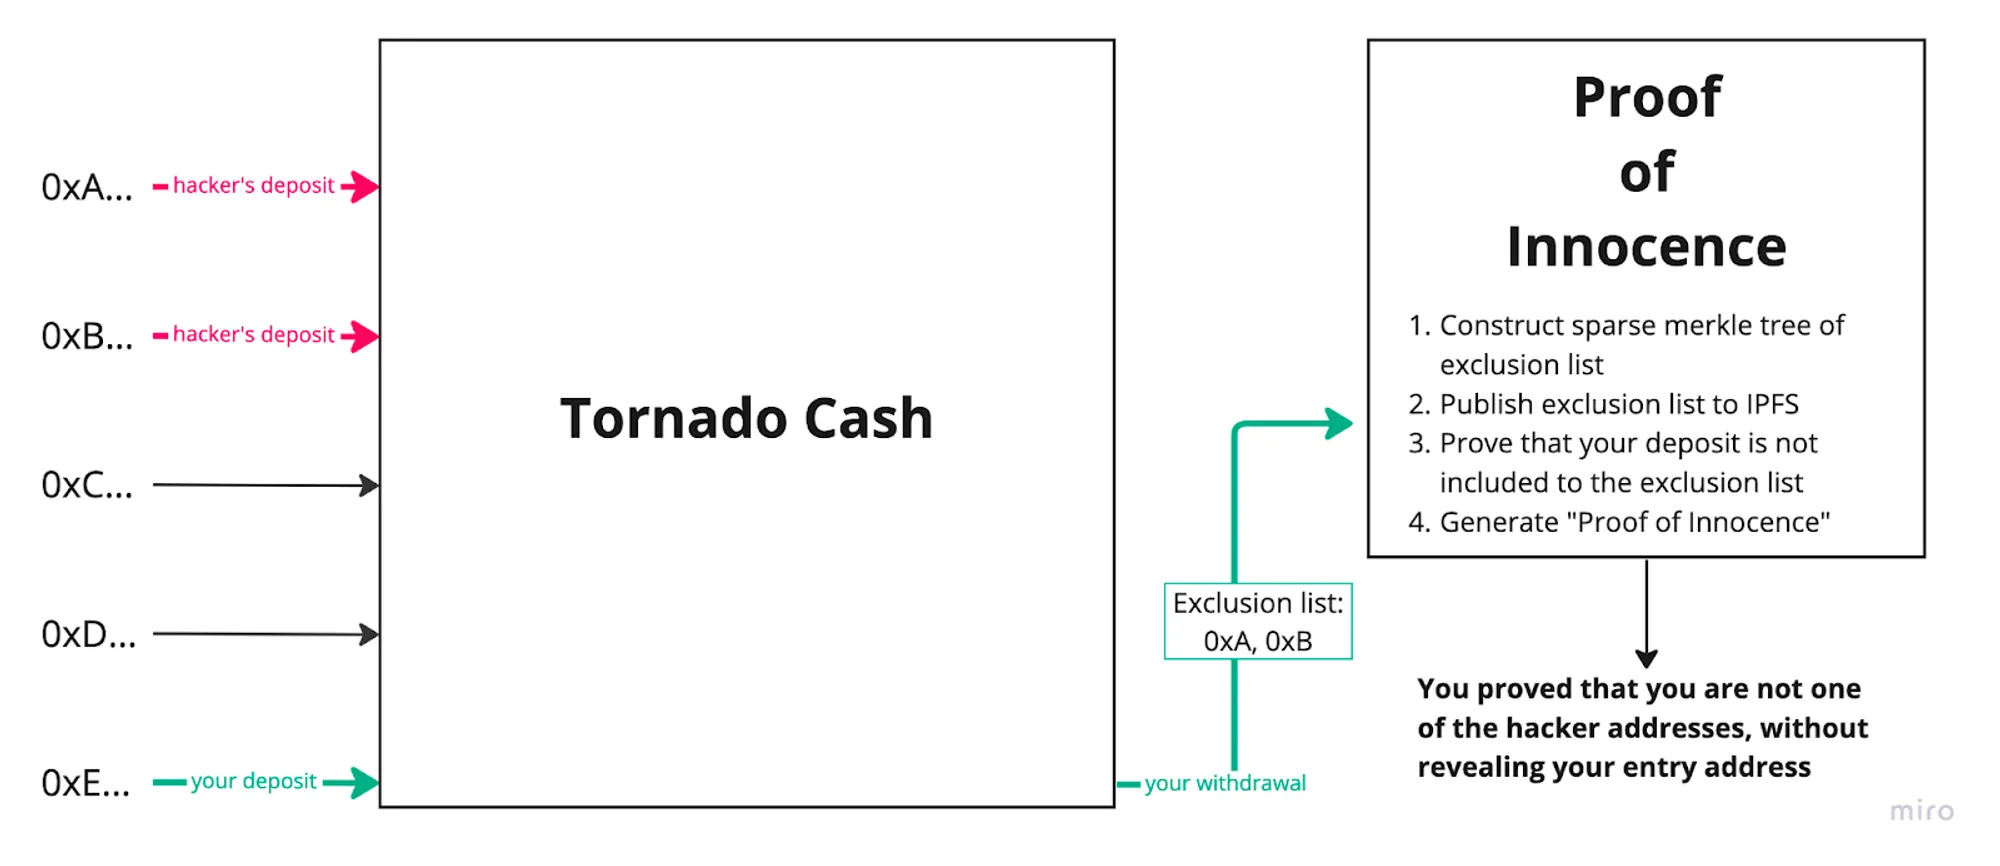 source: https://medium.com/@chainway_xyz/introducing-proof-of-innocence-built-on-tornado-cash-7336d185cda6